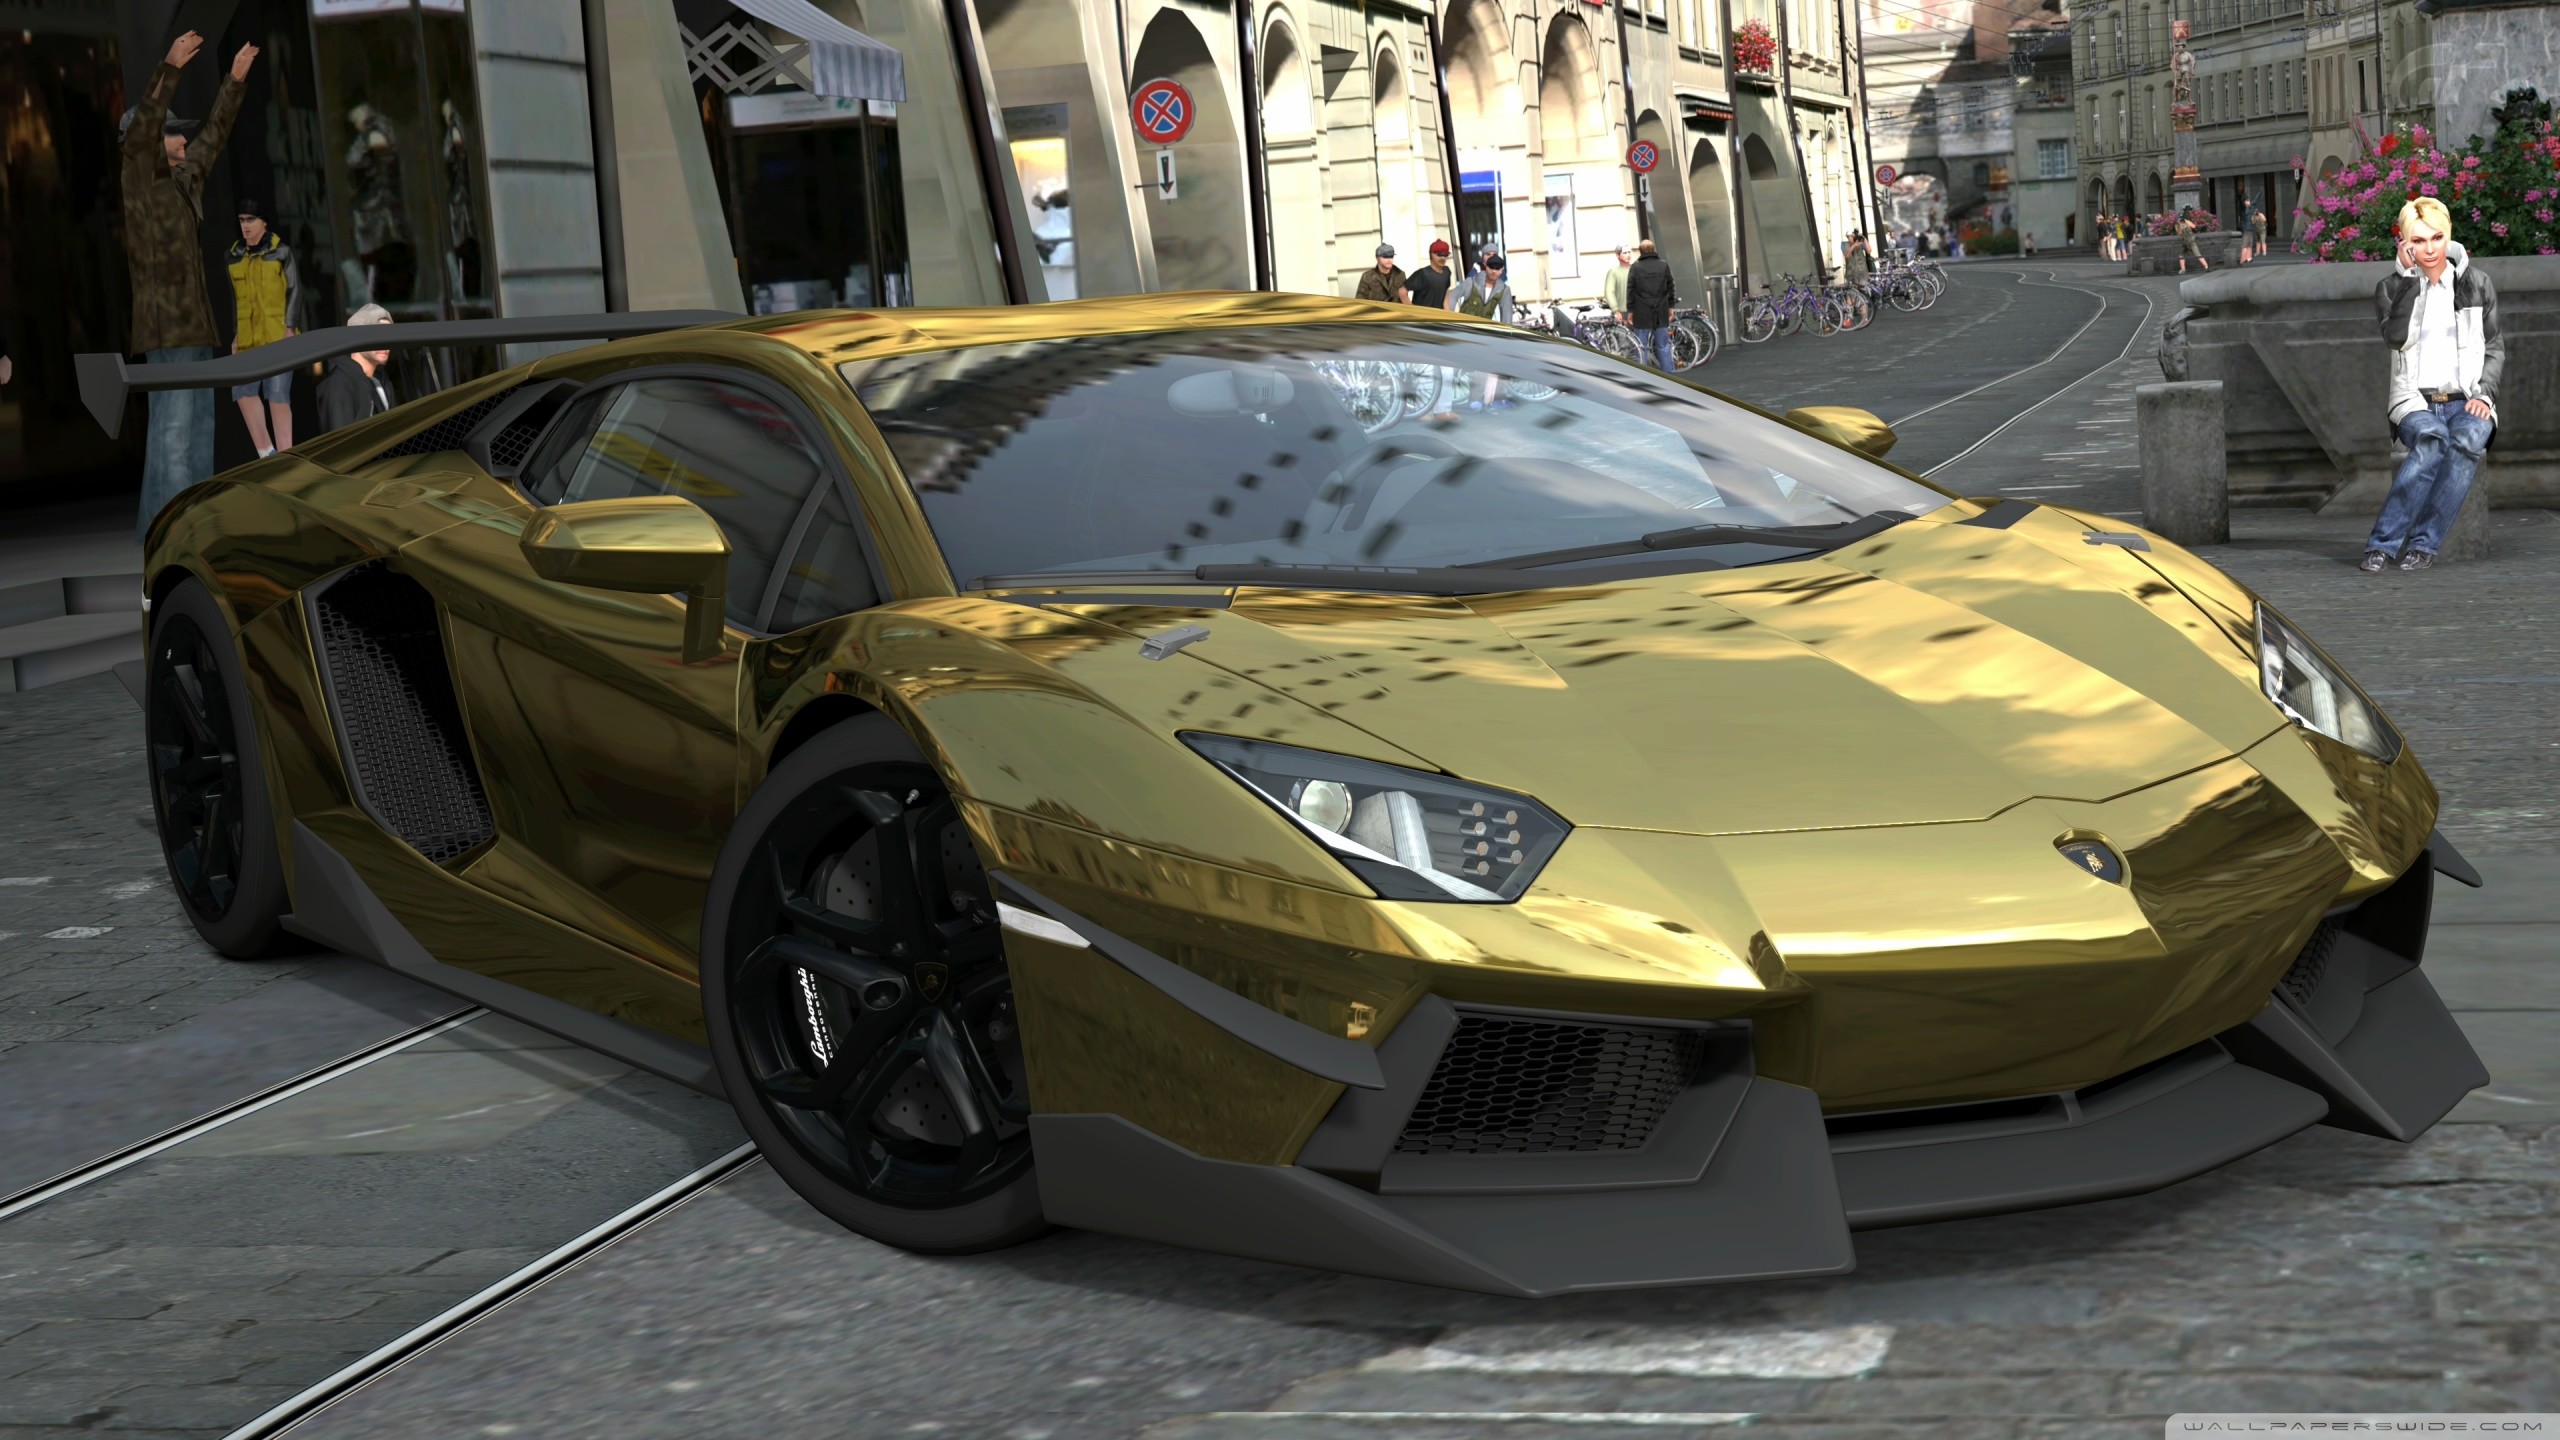 2560x1440 World No1 luxury Car Lamborghini Aventador Gold